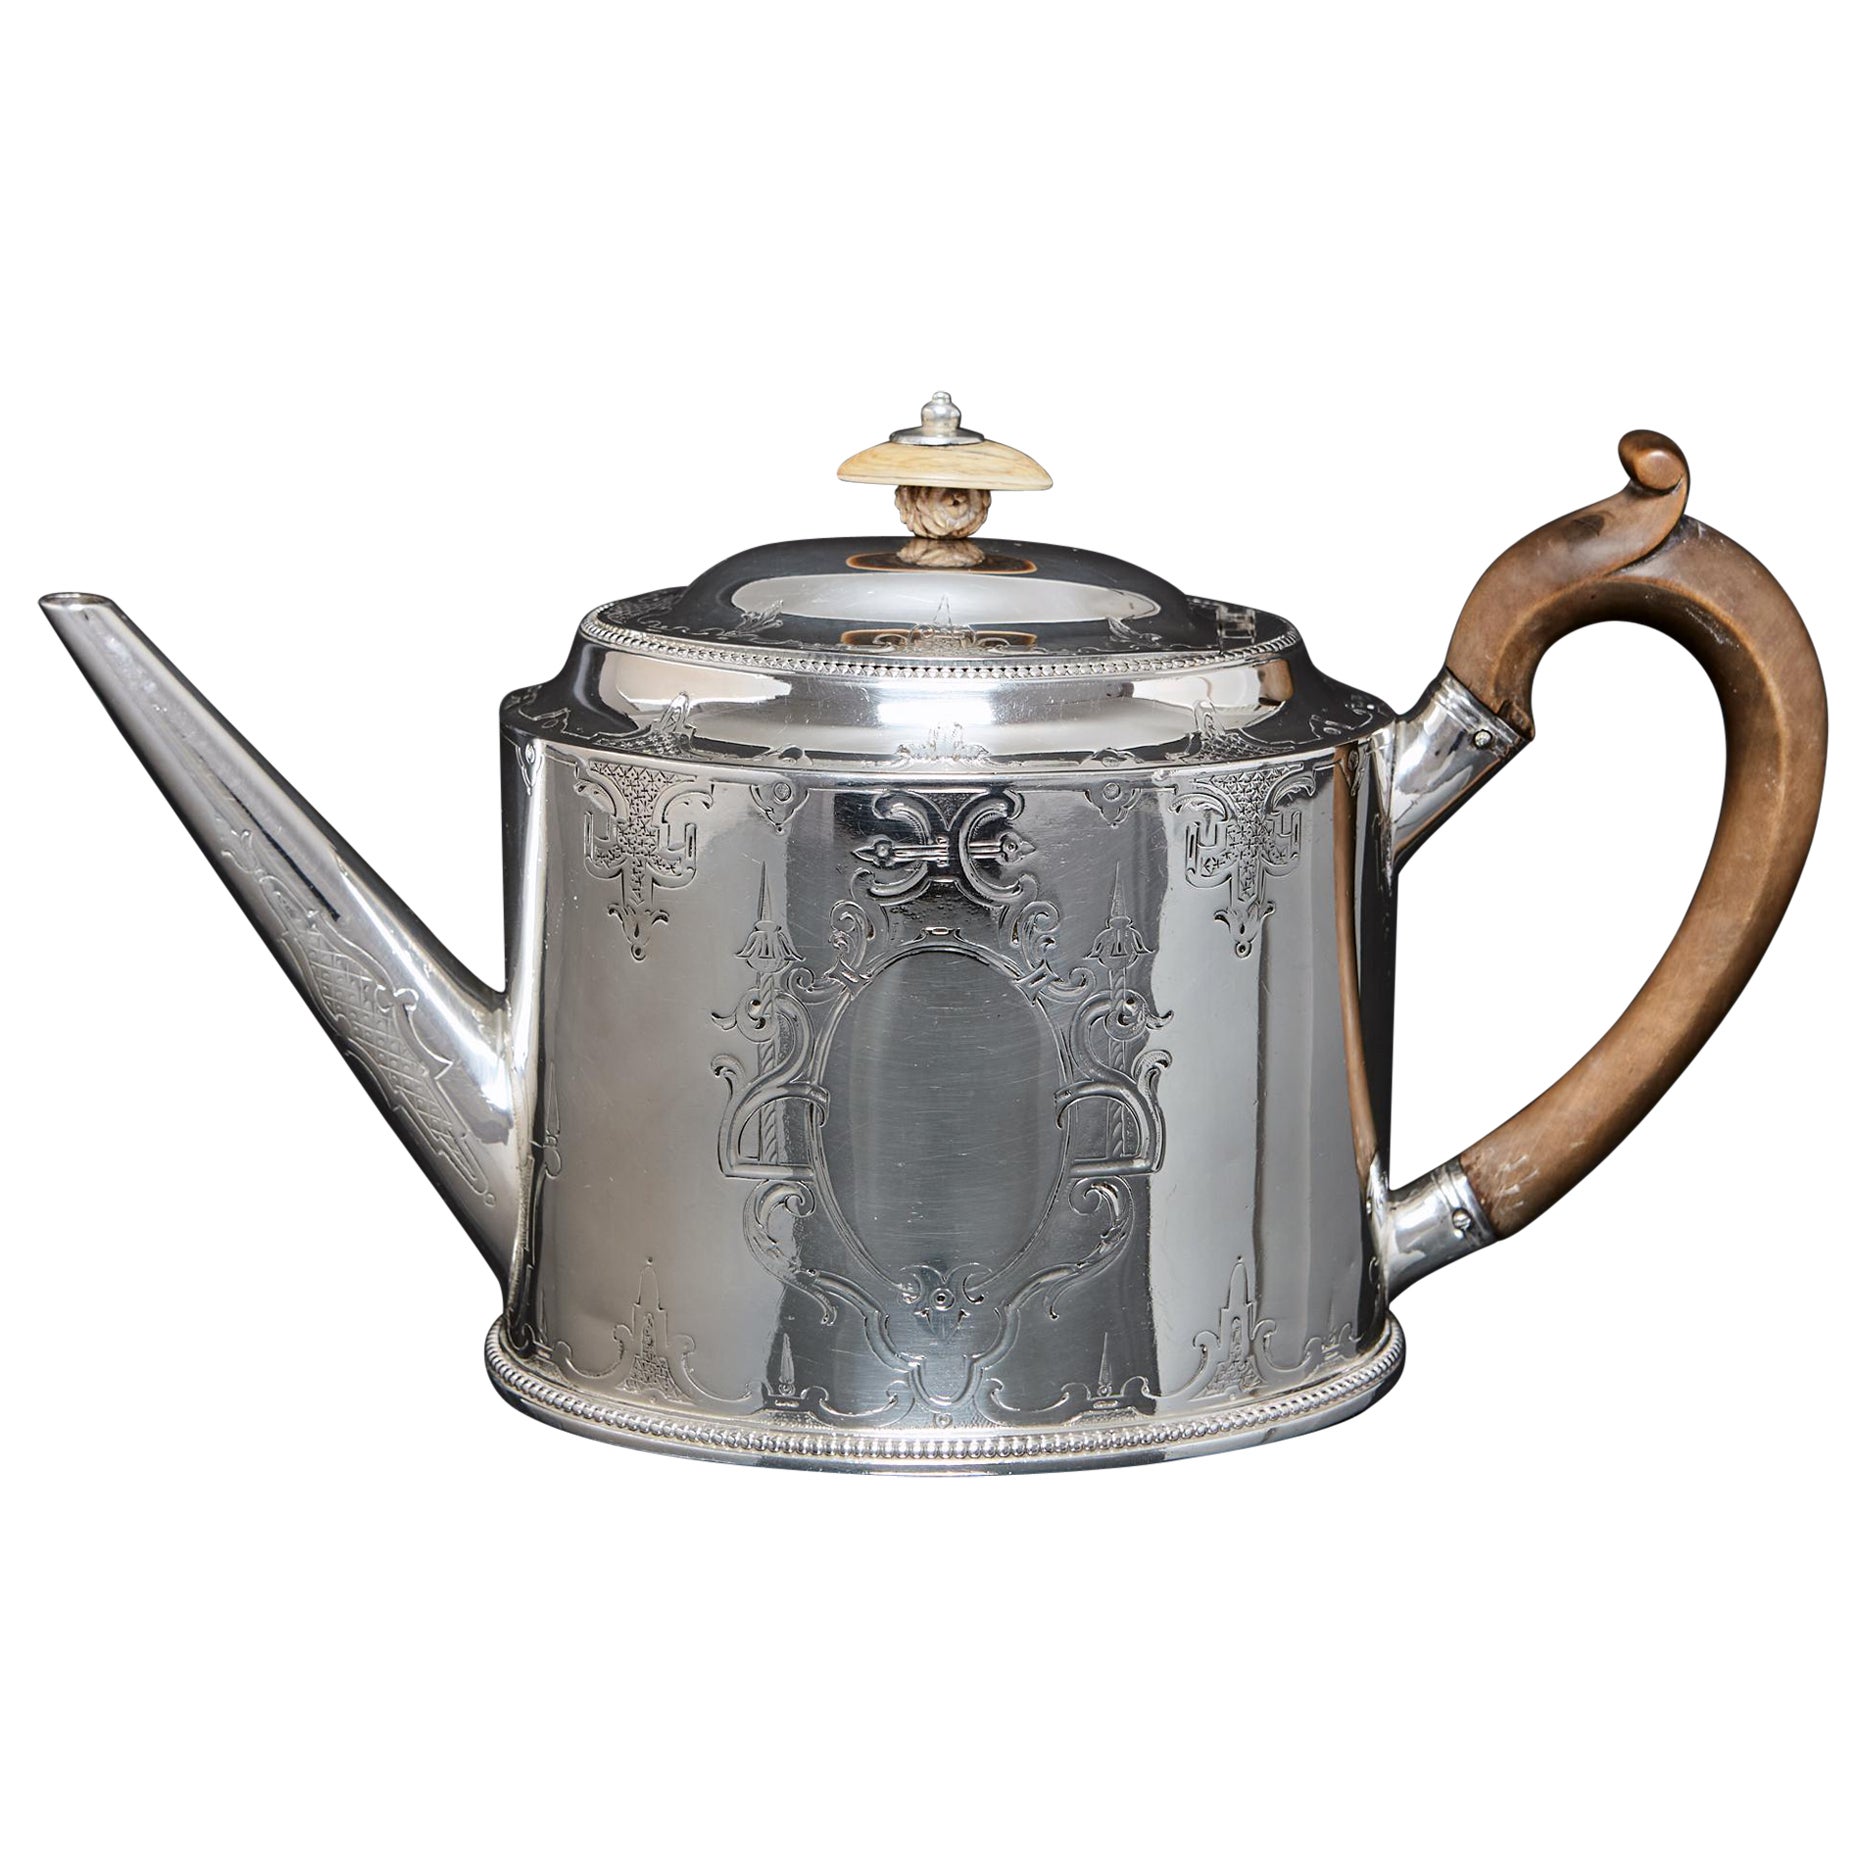 George III antique silver teapot by Hester Bateman